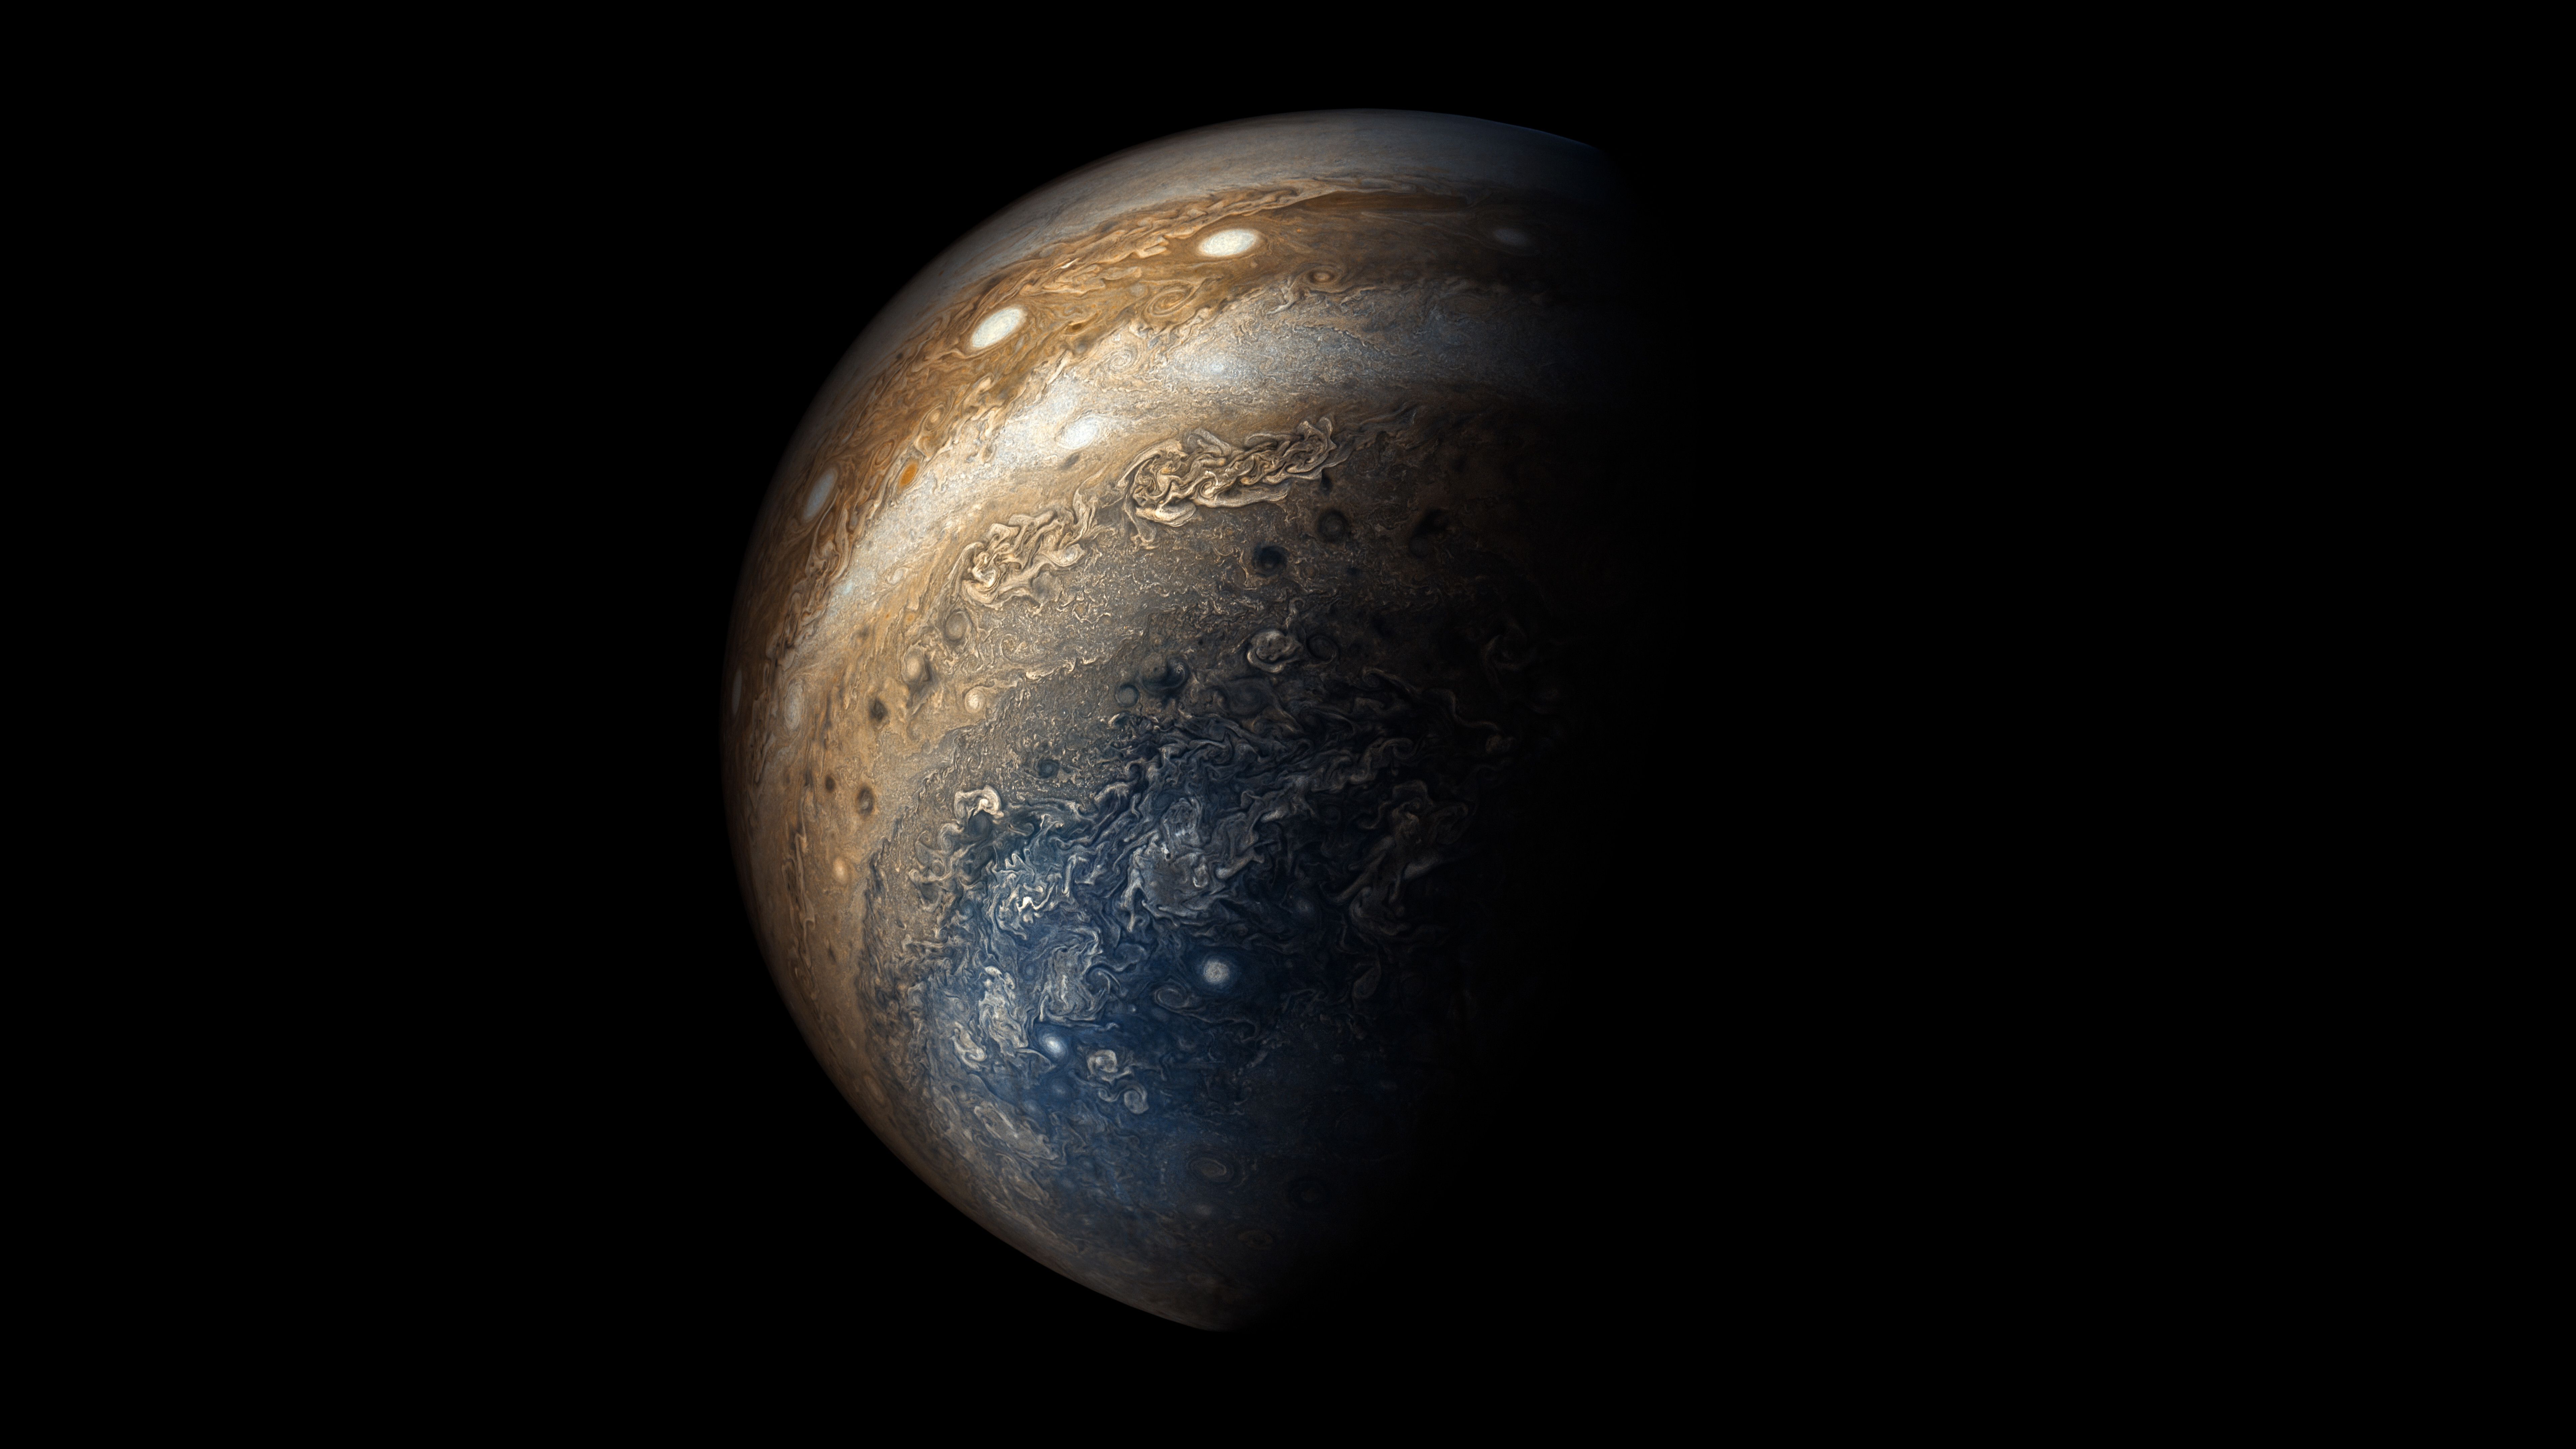 Jupiter Planet 8K 8k HD 4k Wallpaper, Image, Background, Photo and Picture